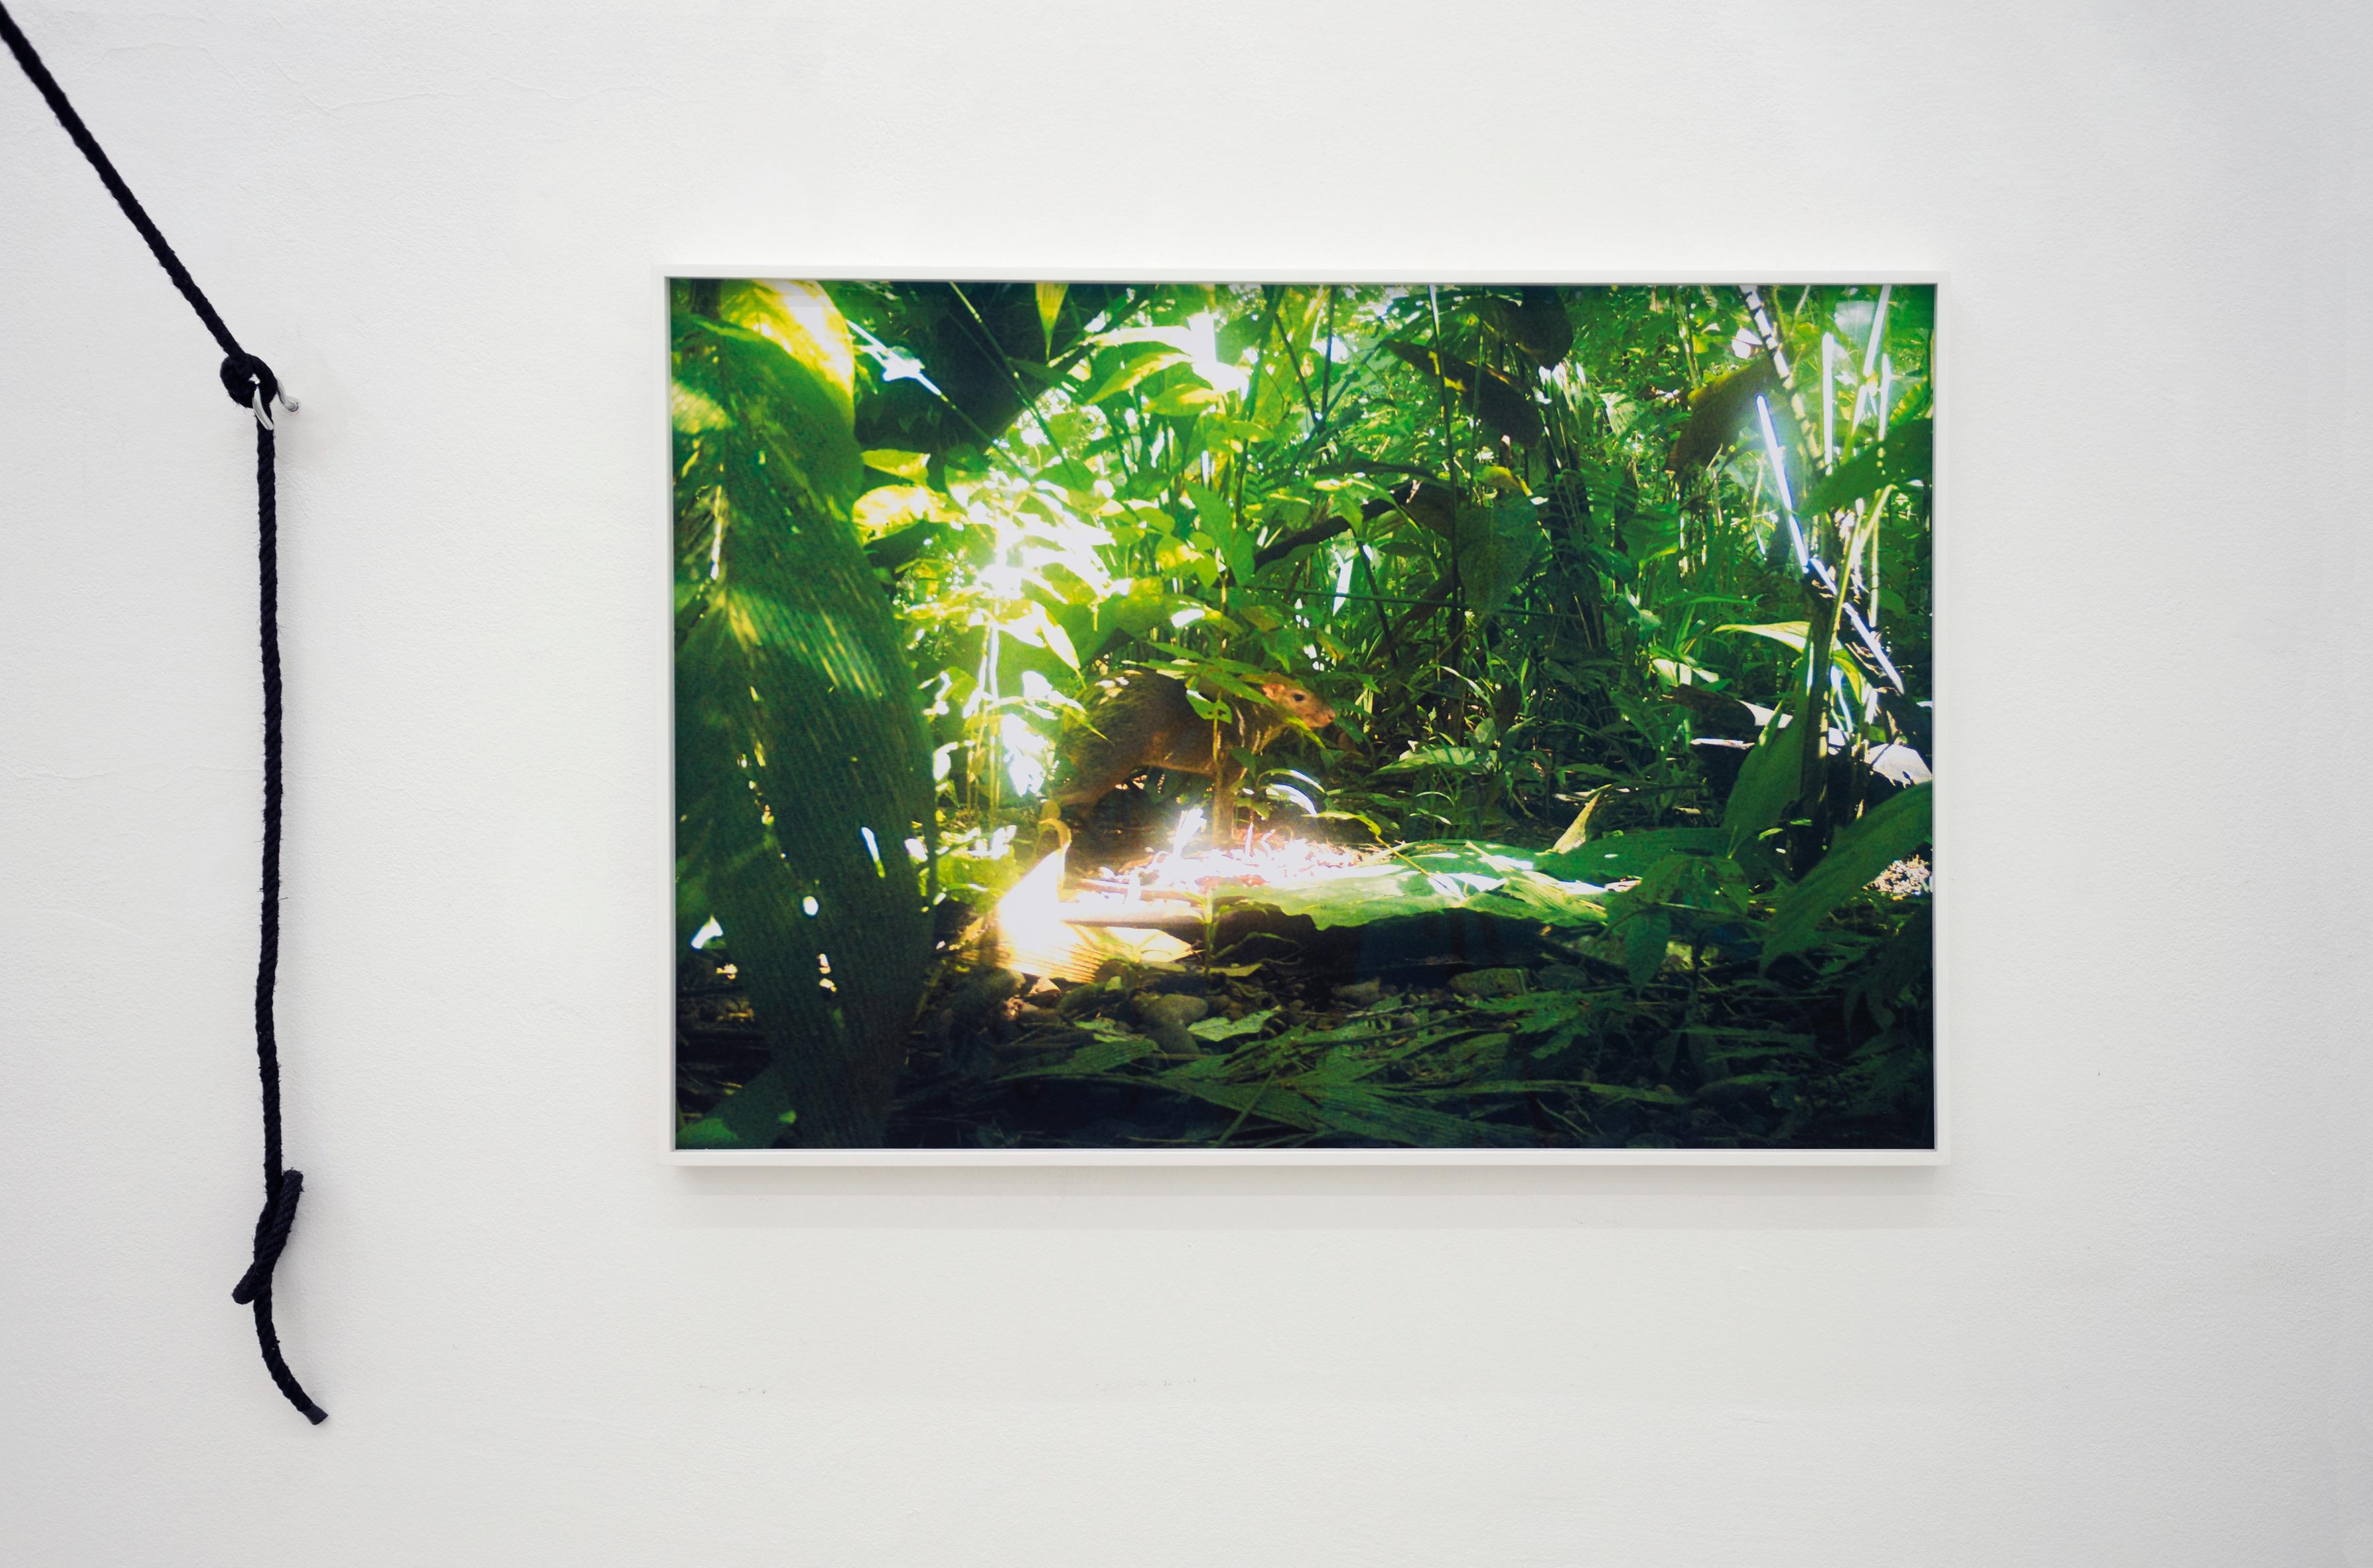 camera trap (Aguti) Ed. 2/3 - Contemporary Jungle Photography  For Sale 3